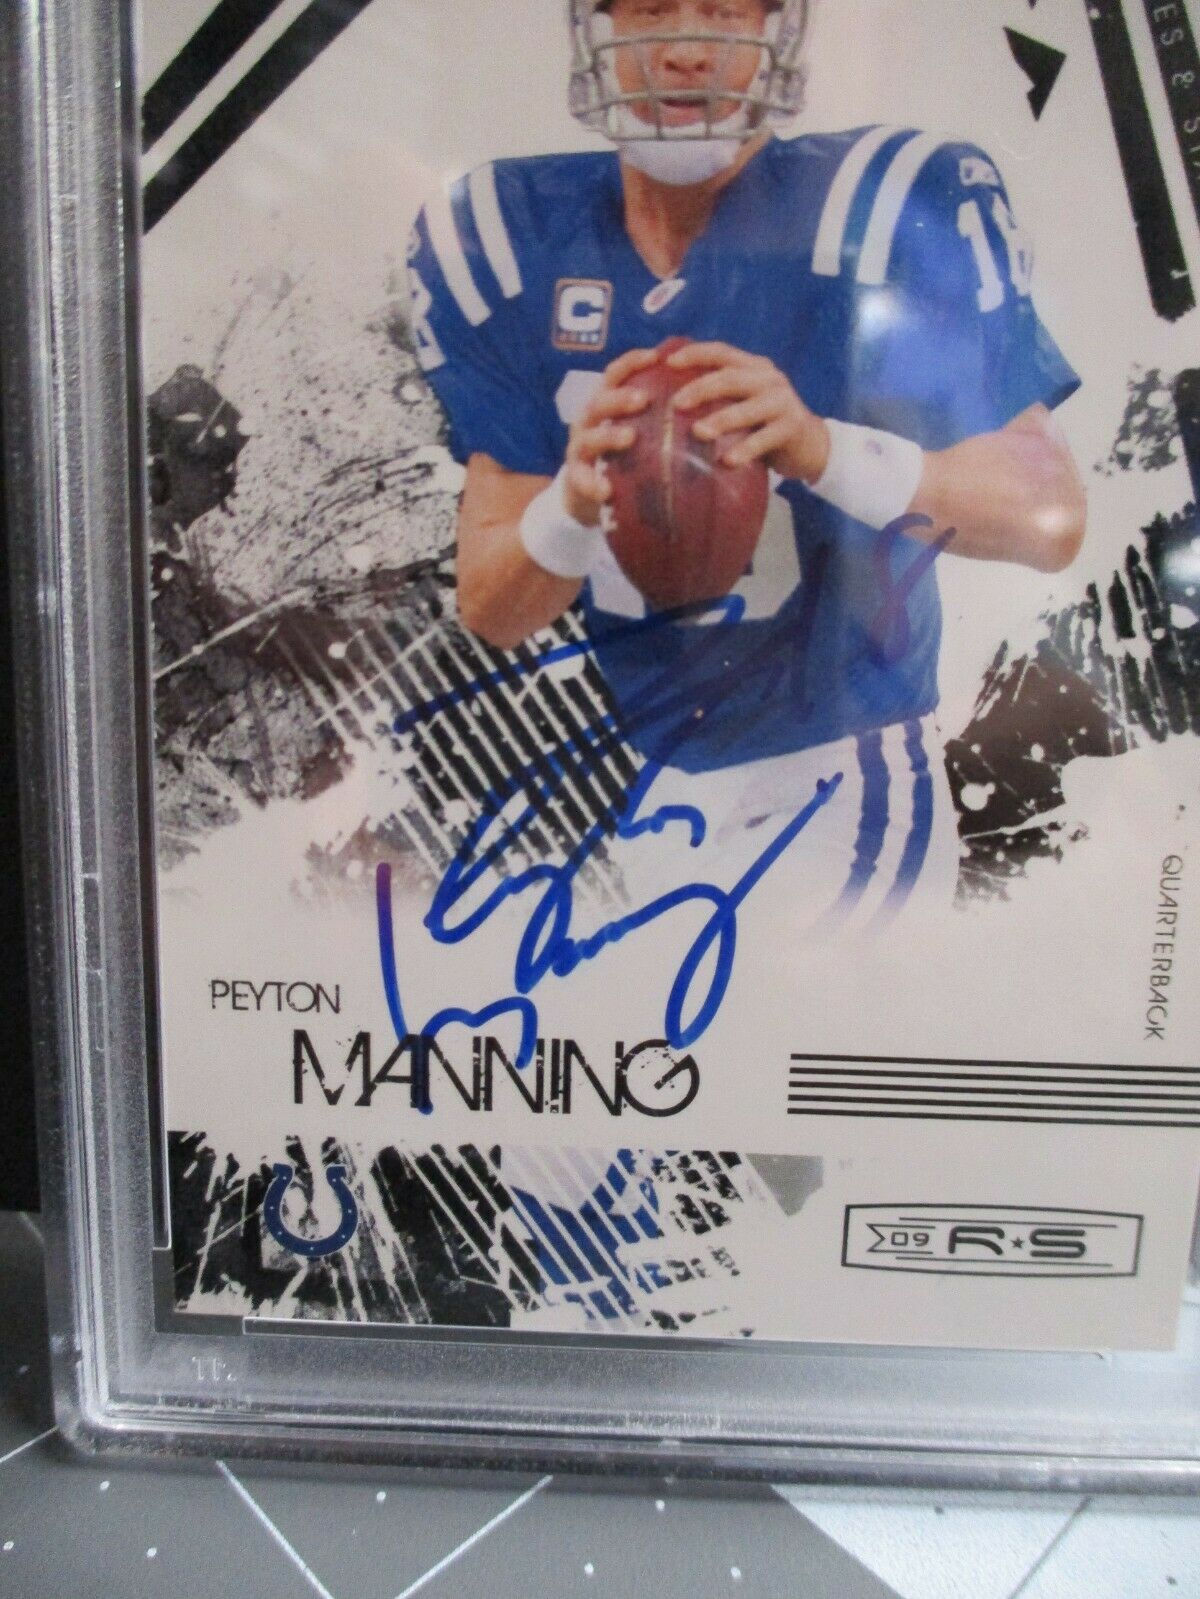 2009 Rookies Stars Peyton Manning Autographed Card